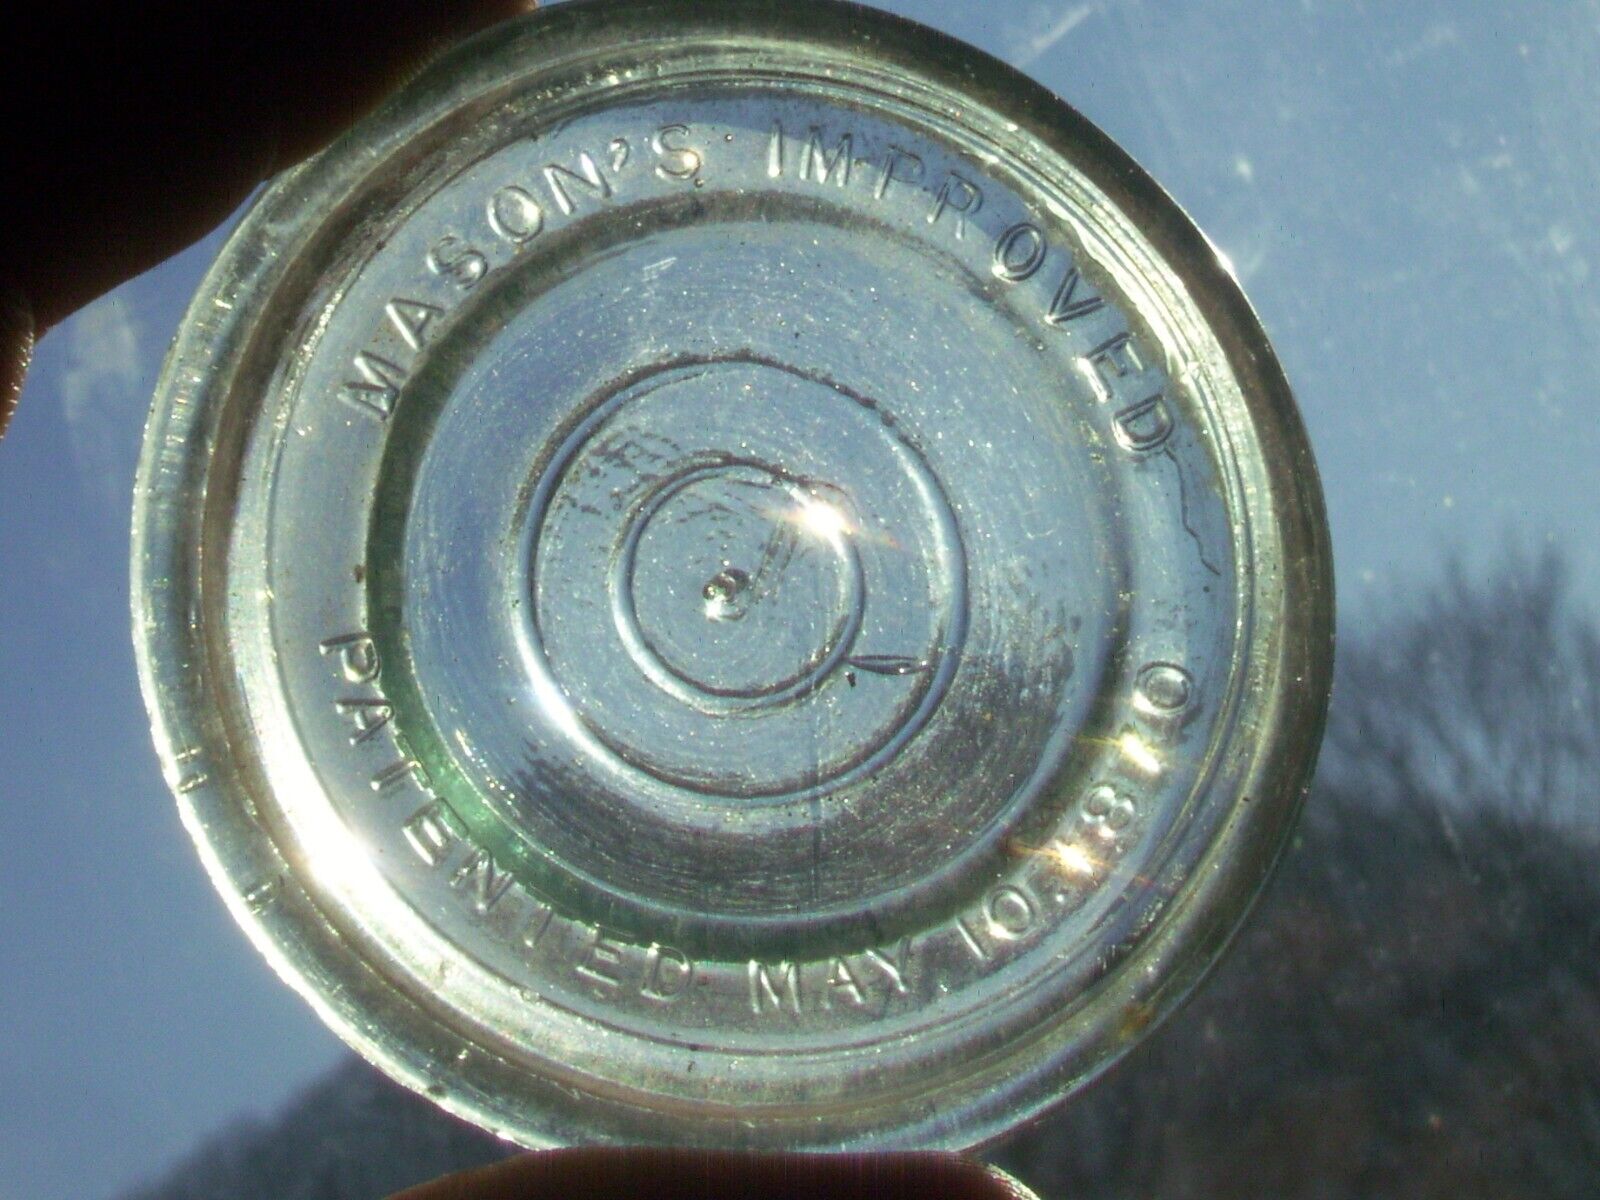  Blue Mason\'s Improved Pat\'d May 10, 1870 glass canning jar insert pt. qt. hg